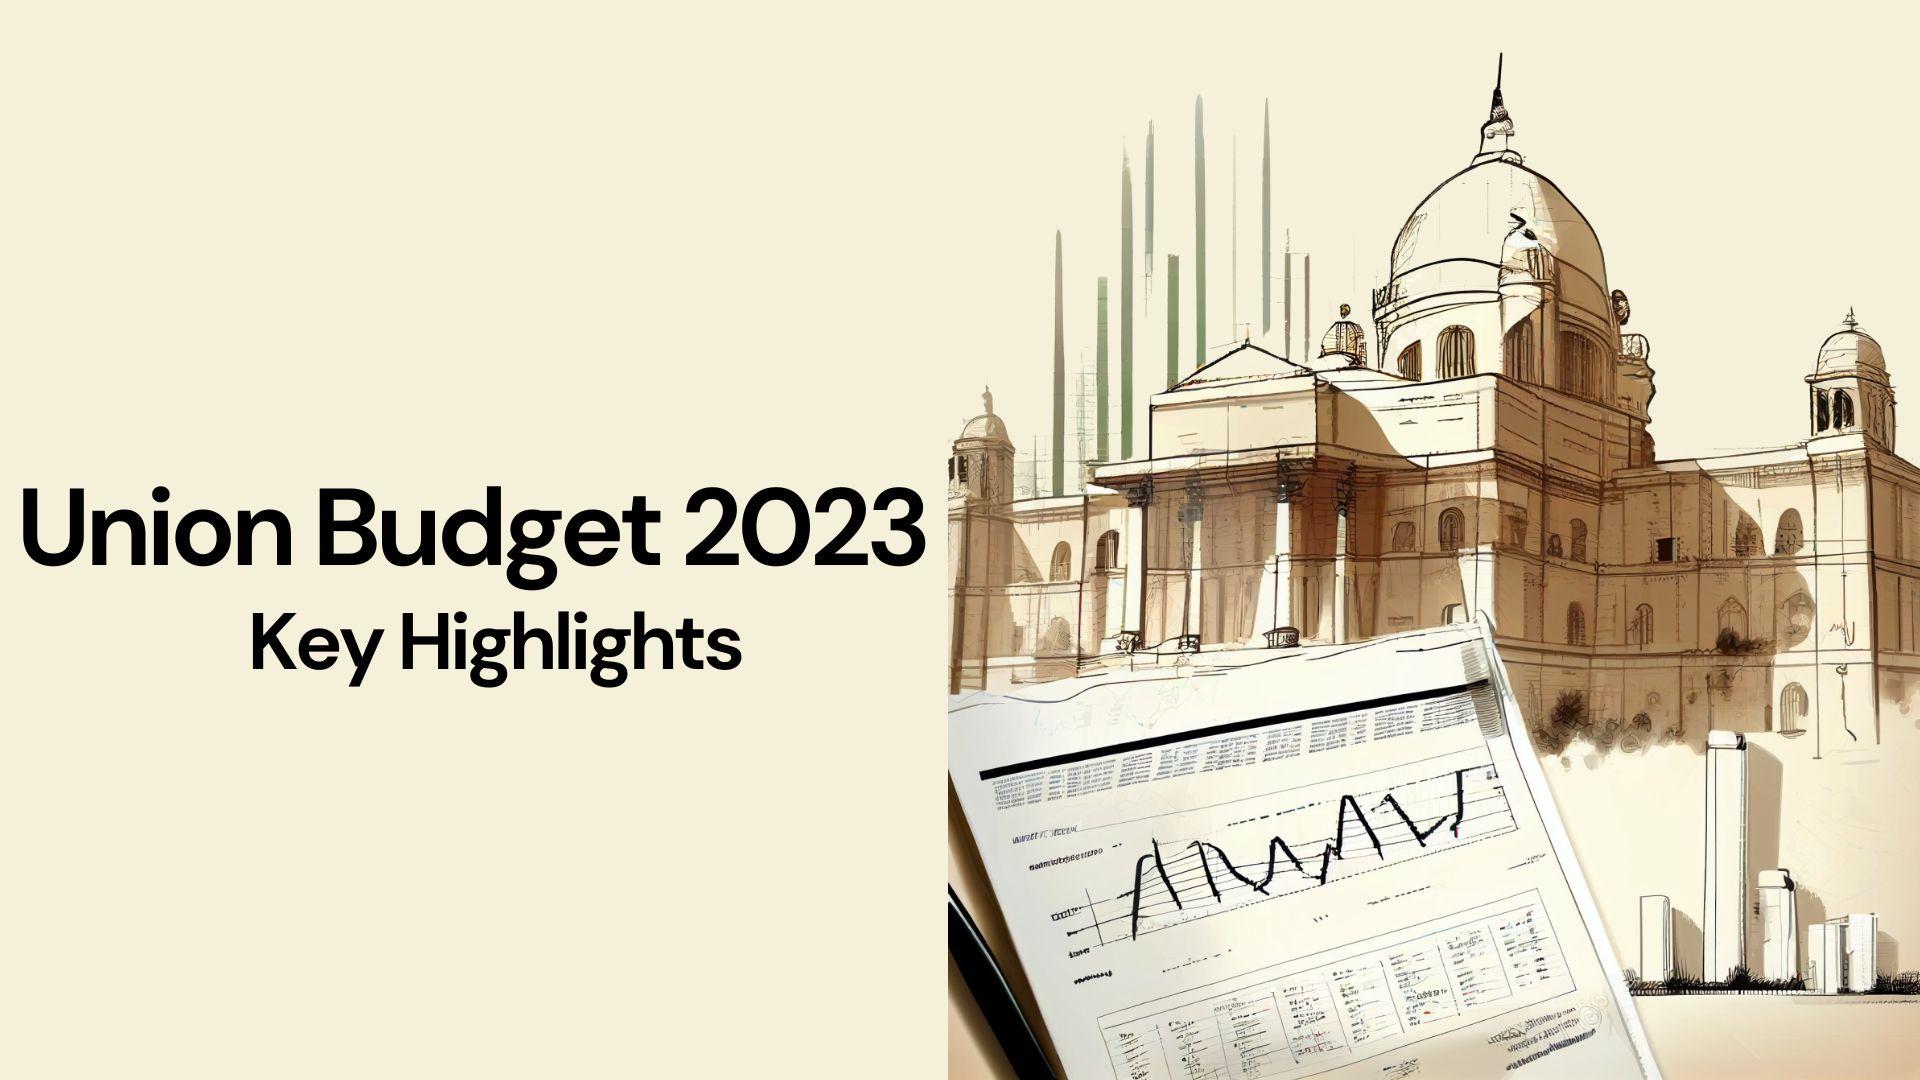 Union budget 2023 is presented by FM Nirmala Sitharaman_50.1